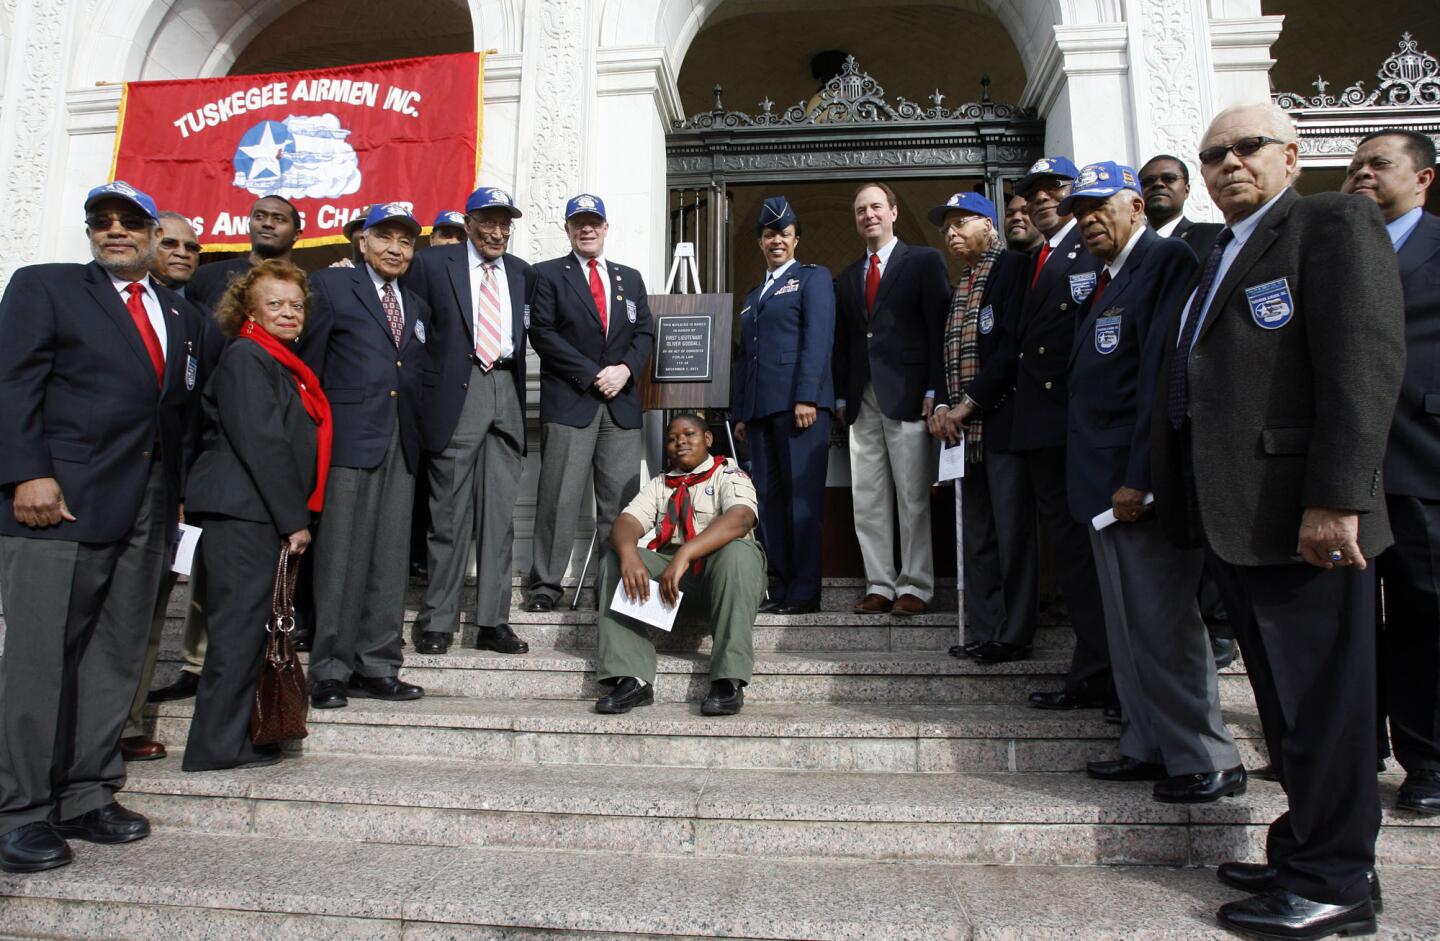 Photo Gallery: Pasadena post office dedicated in honor of Tuskegee Airmen member